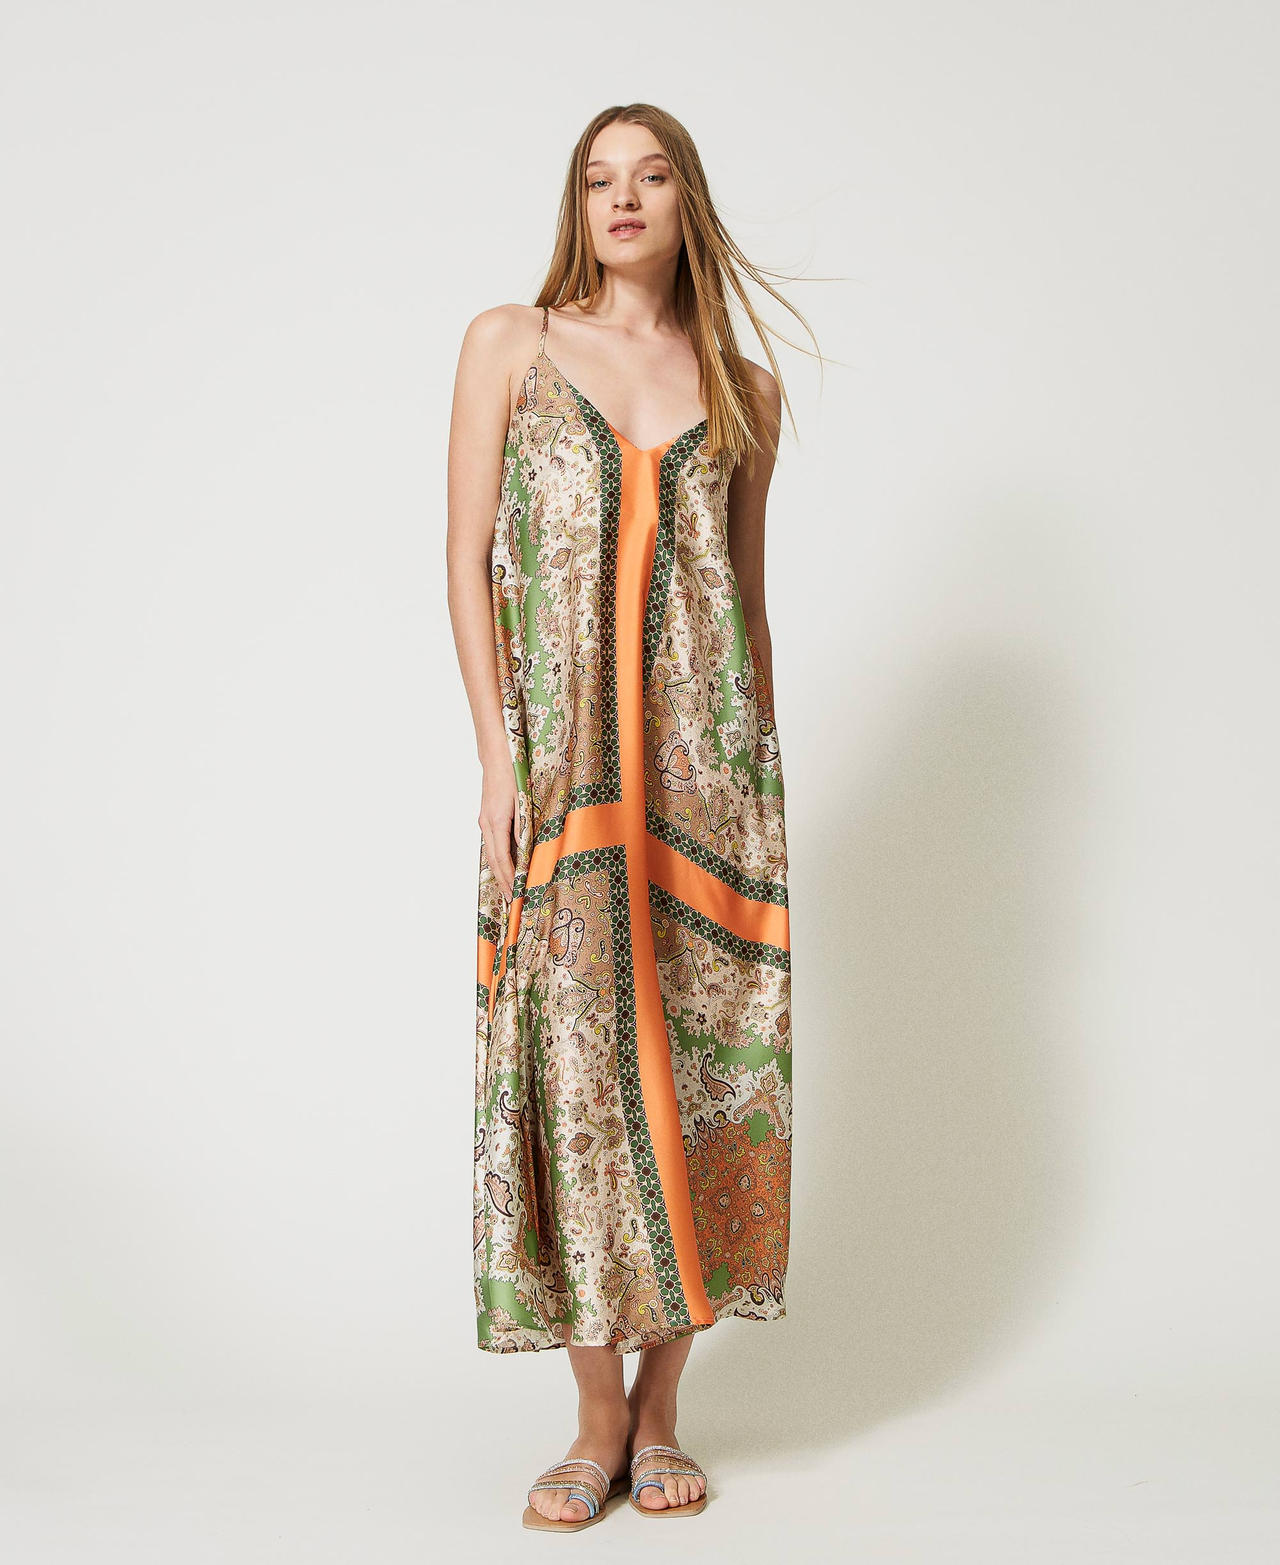 Robe longue en satin avec imprimé foulard Imprimé Foulard Orange « Cantaloup » Femme 231LM2VBB-02